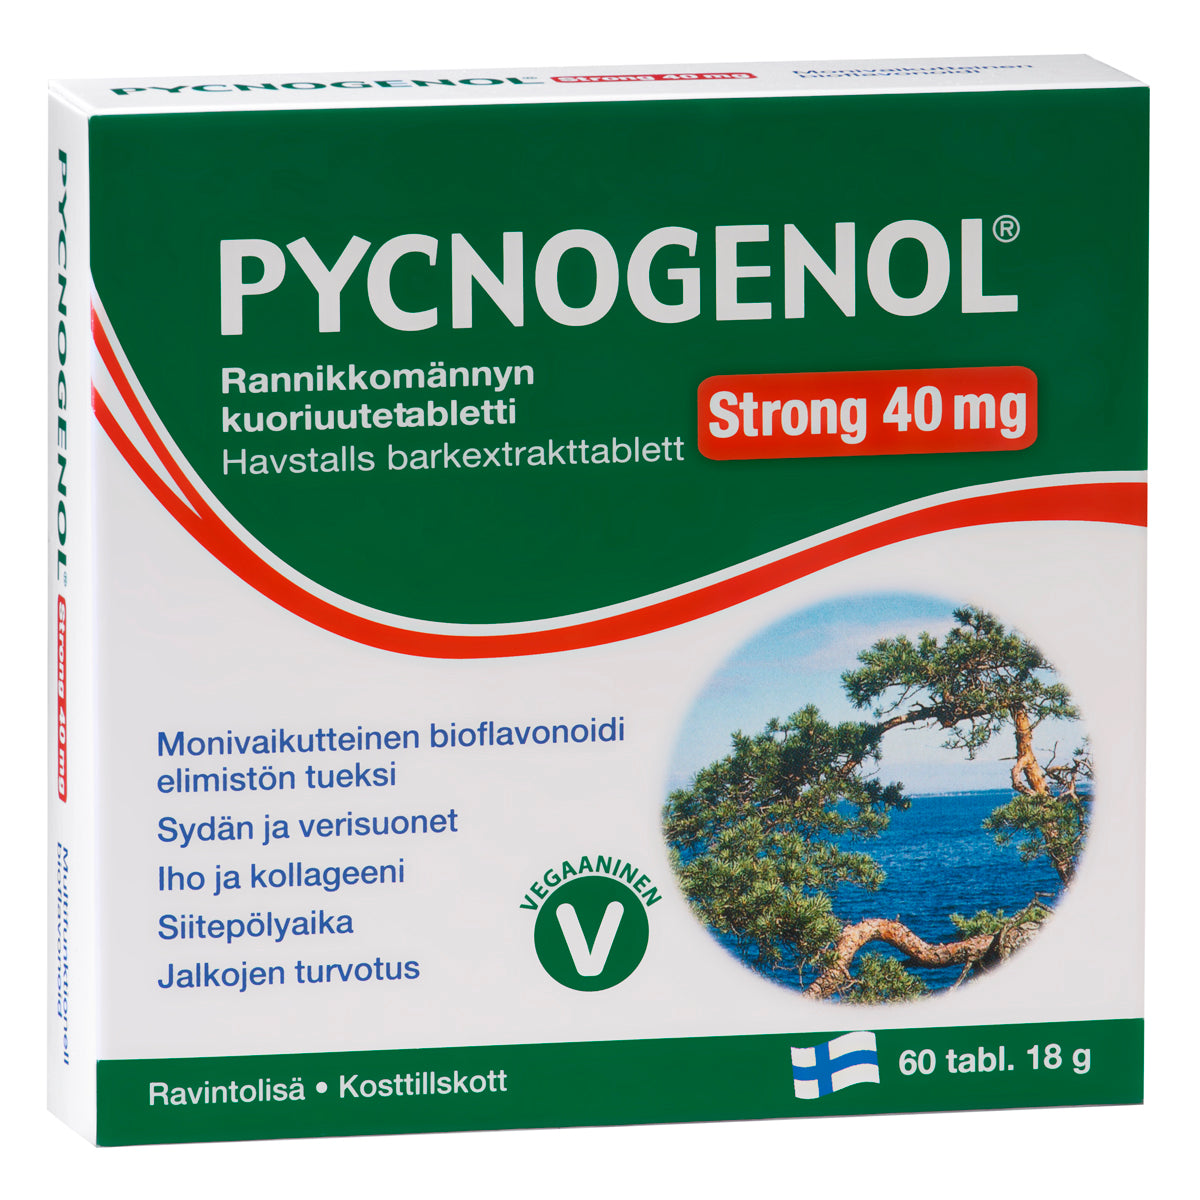 Pycnogenol Strong 40 mg - Rannikkomännyn kuoriuutetabletti 60 tabl.